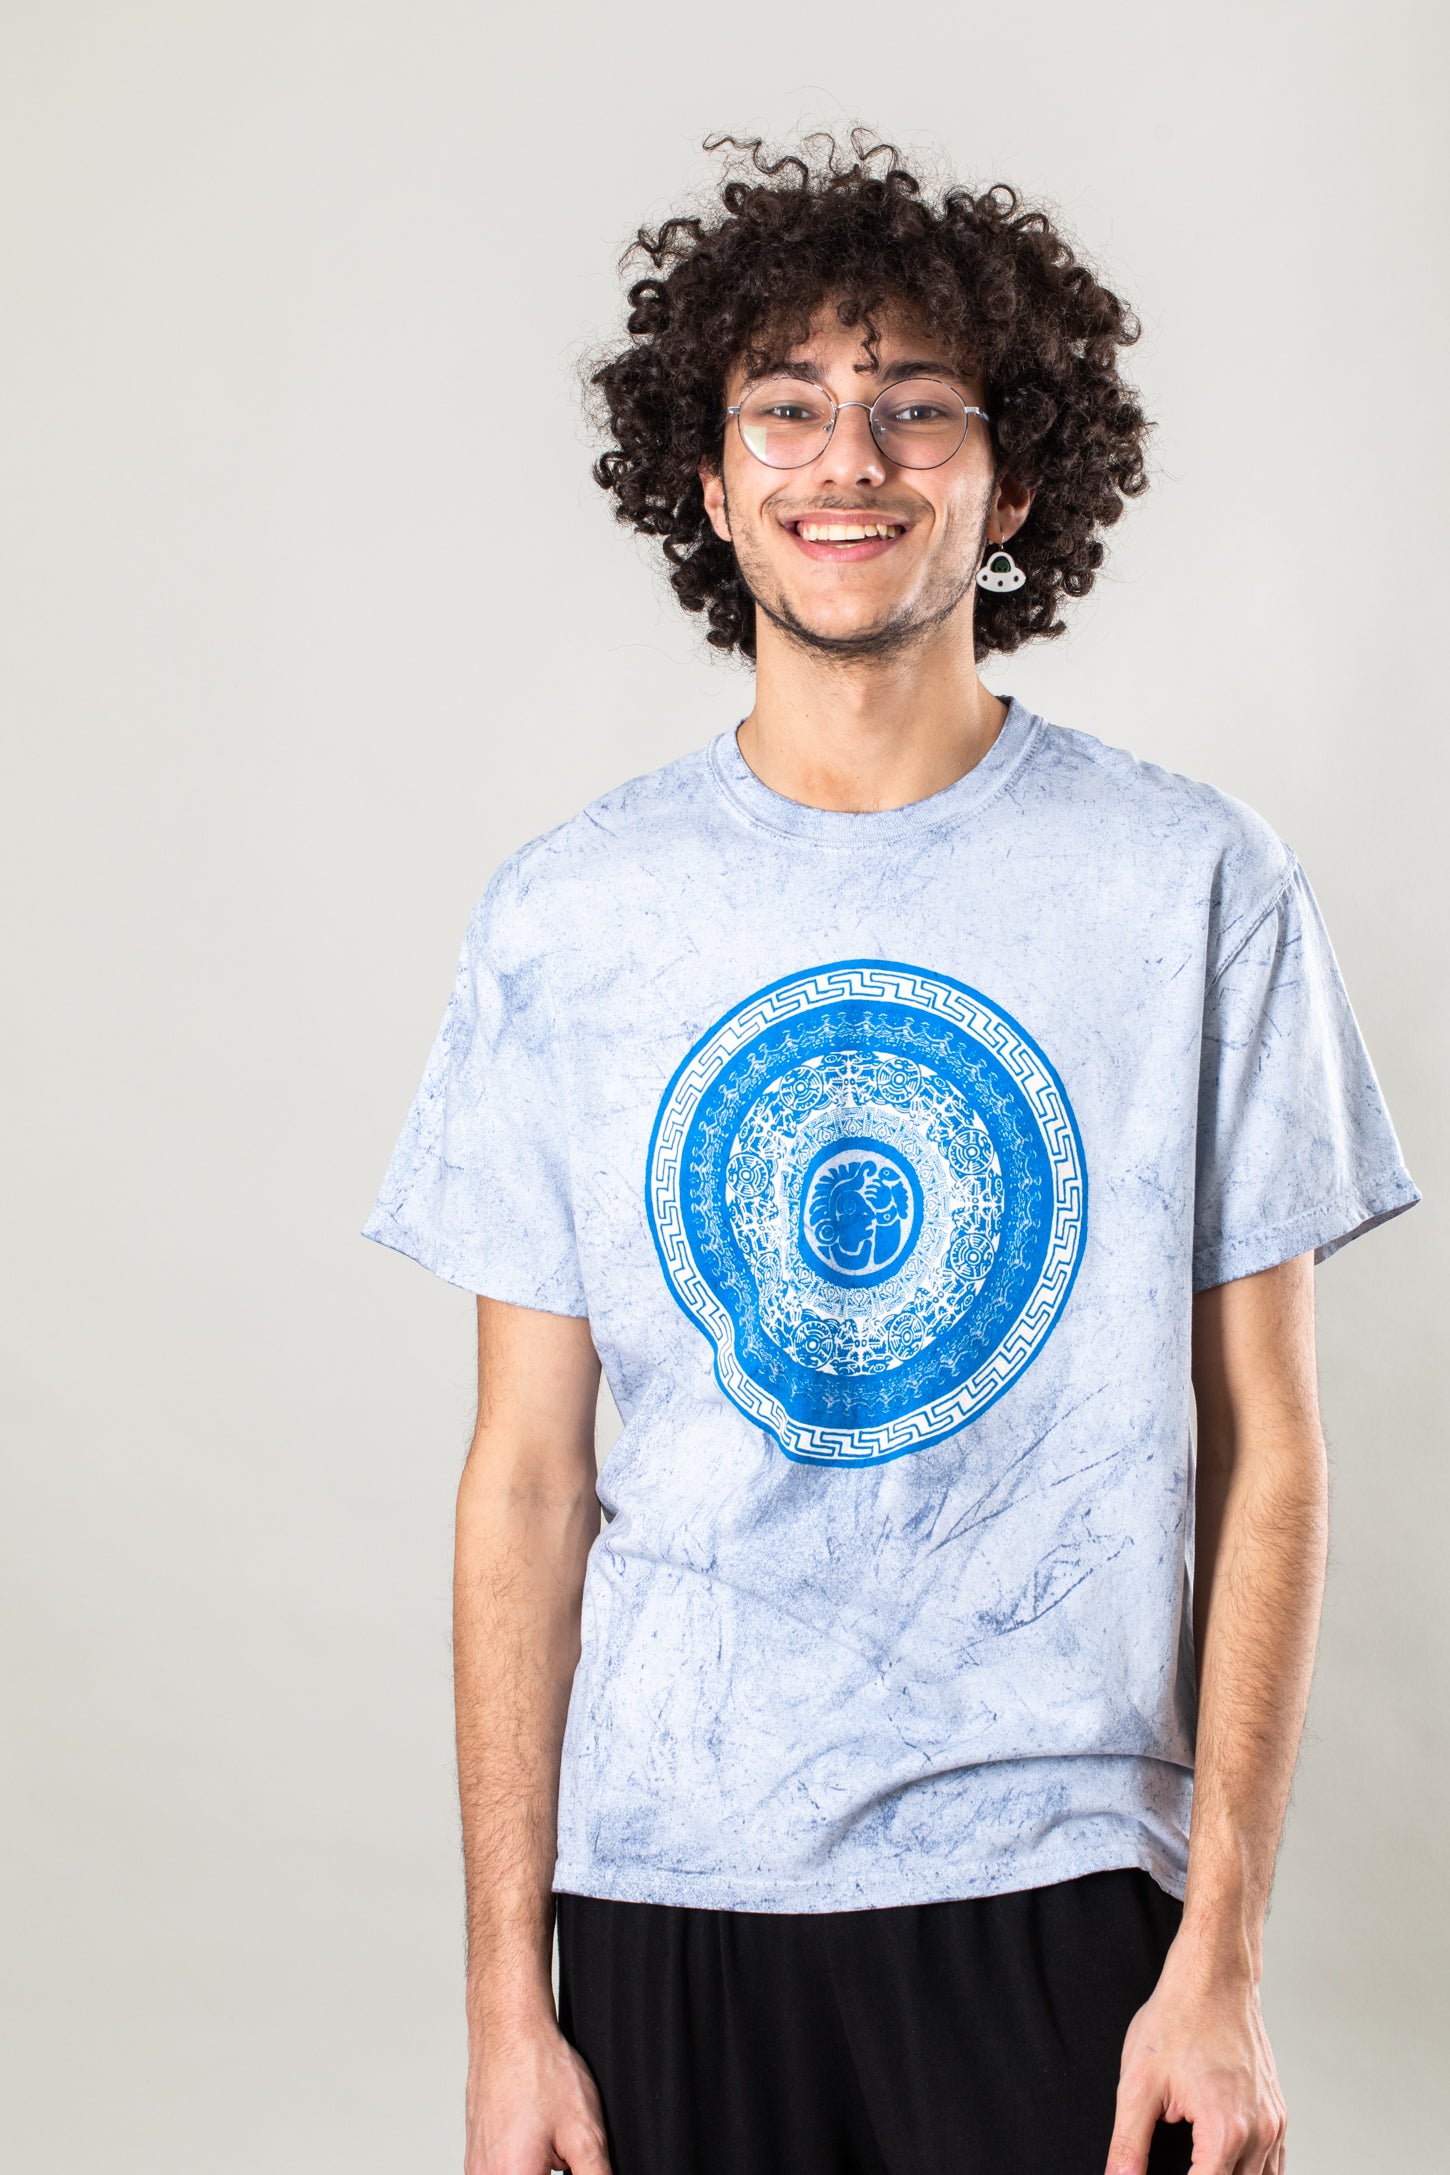 Mexicali Blues Mandala Color Blast T-Shirt